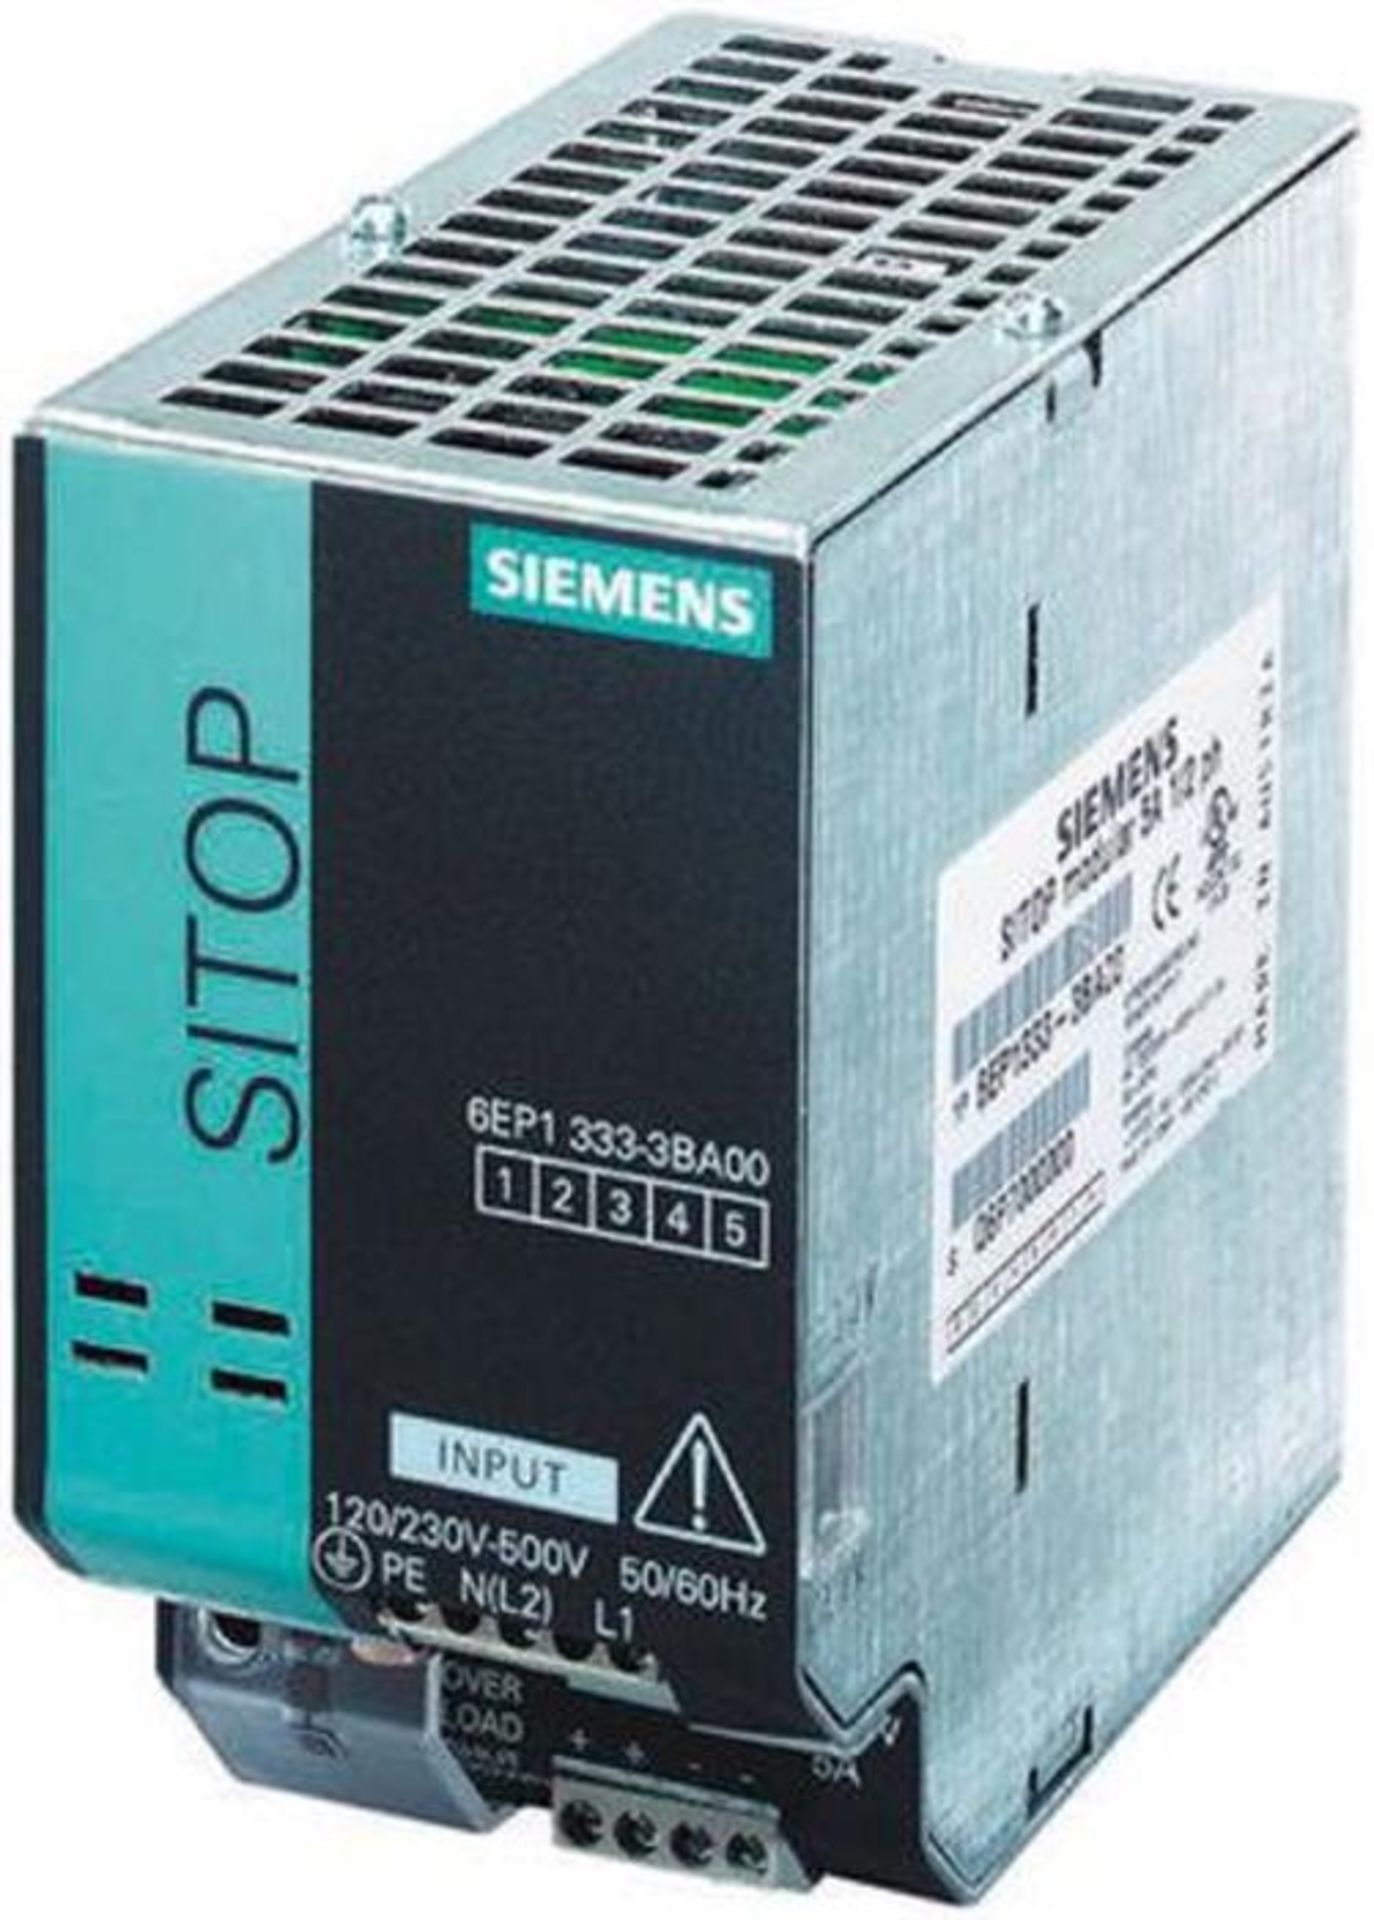 Siemens SITOP 120W 5A Power Supply